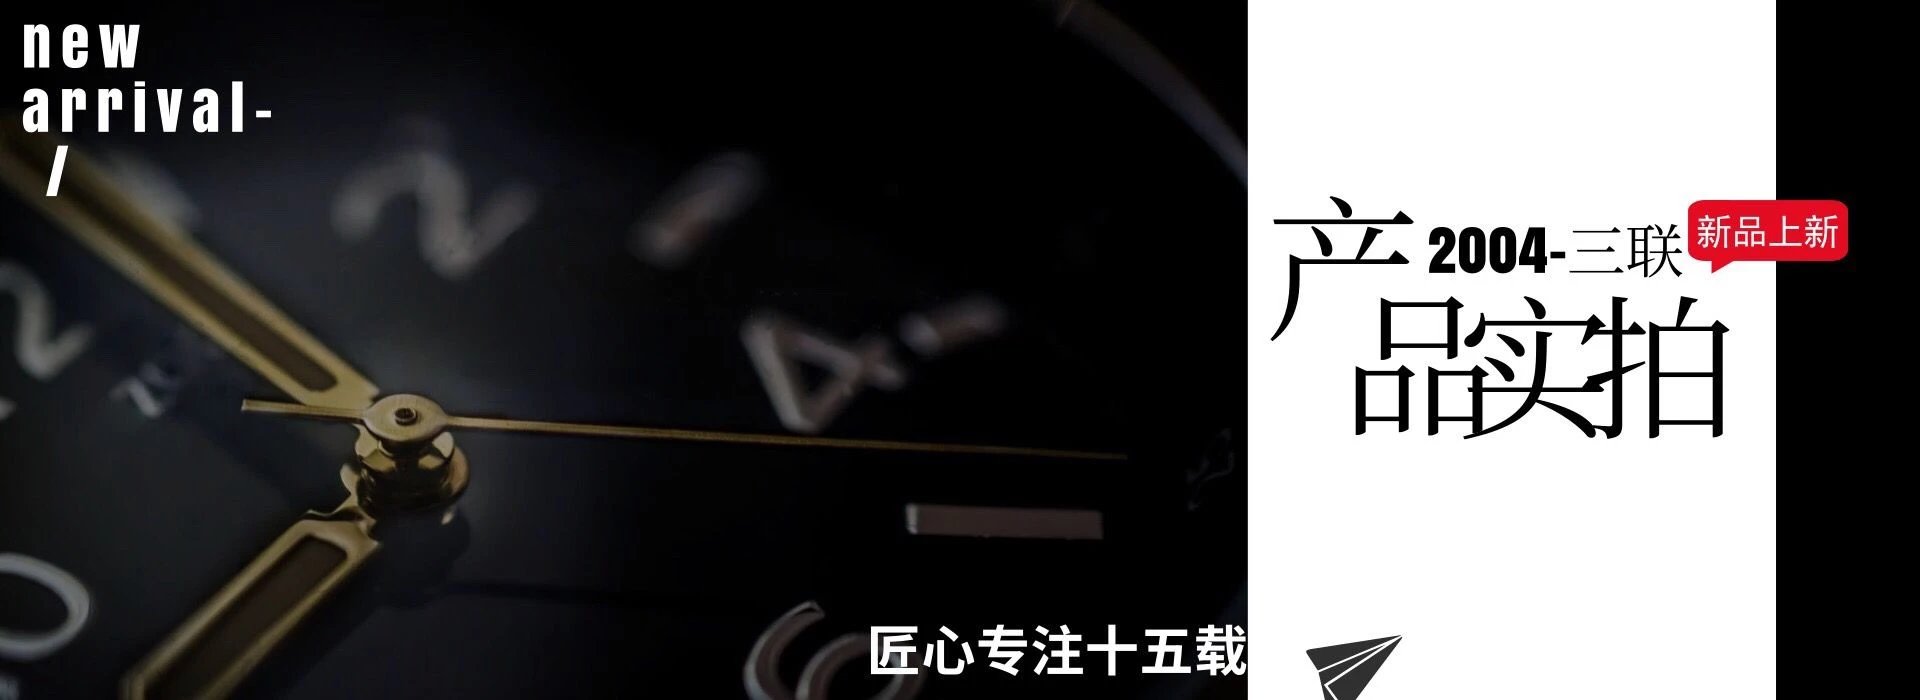 MKS2019新品隆重发布【欧米加蝶飞经典女款系列钢带机械简约腕表】32mm尺寸